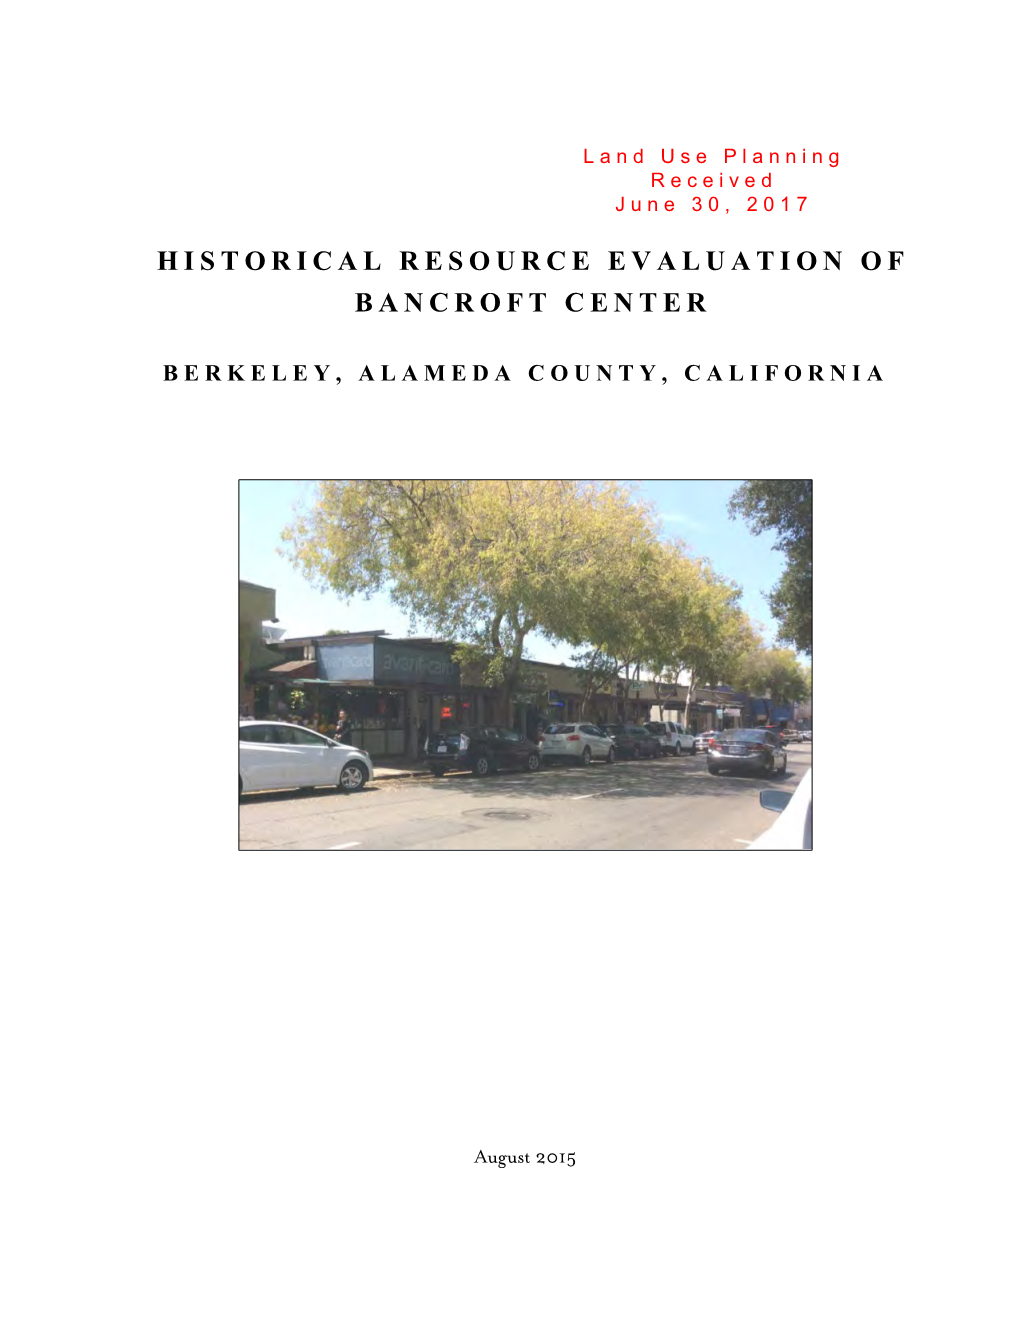 Historical Resource Evaluation of Bancroft Center